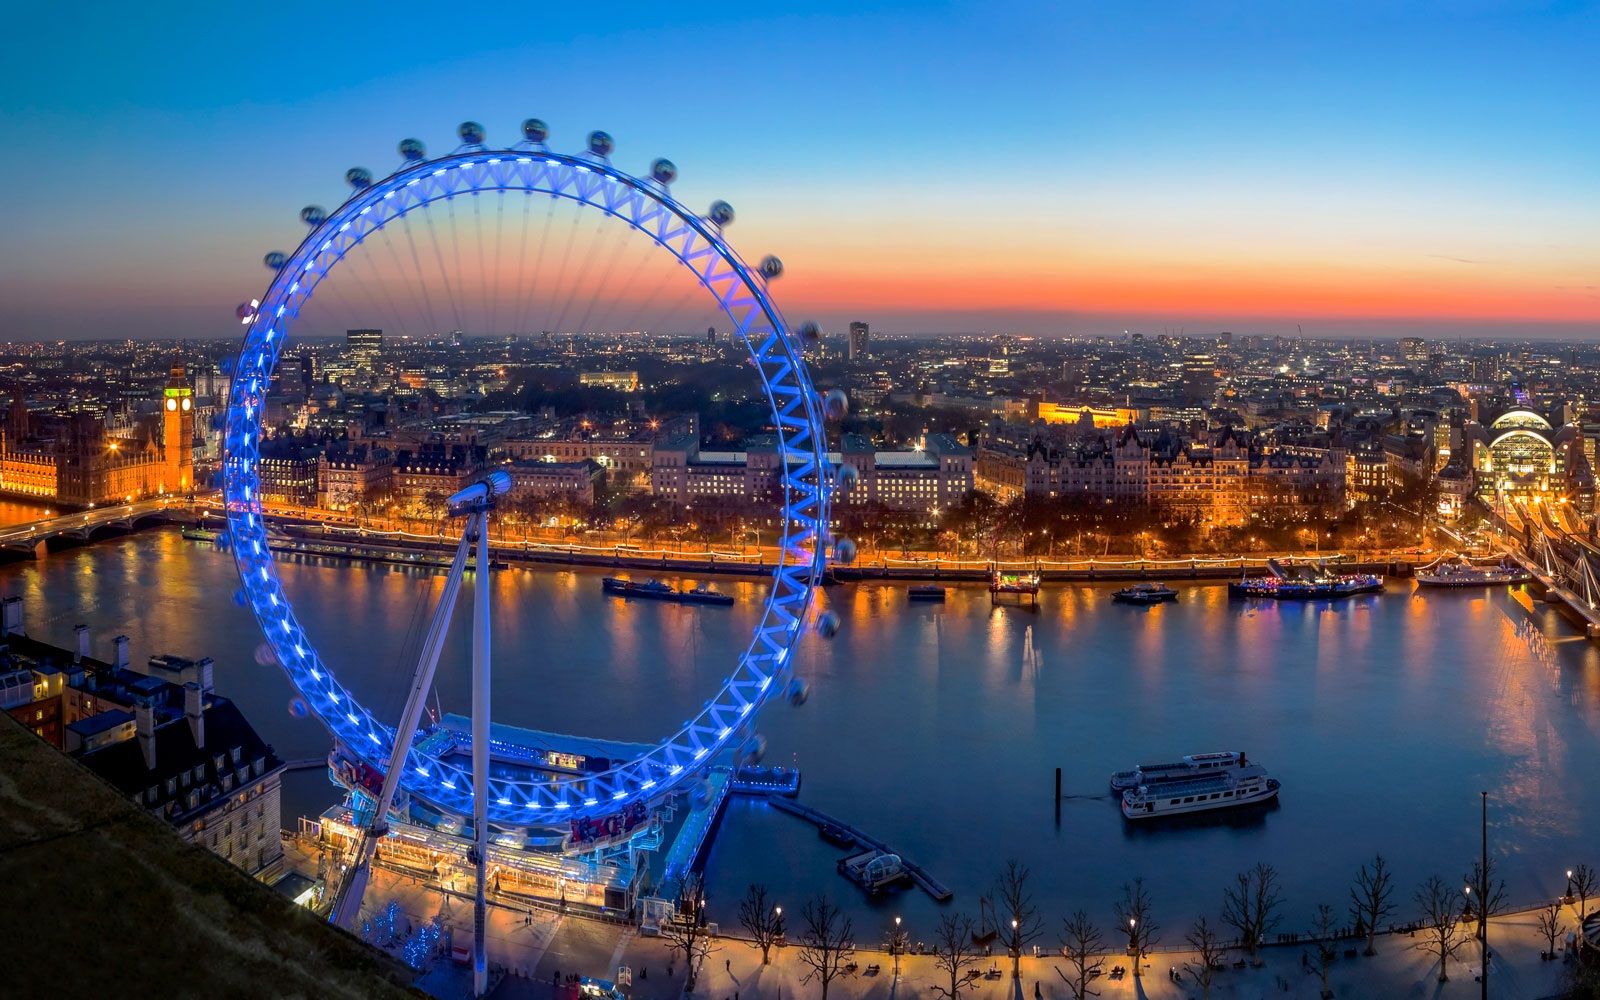 how many tourists visit london eye